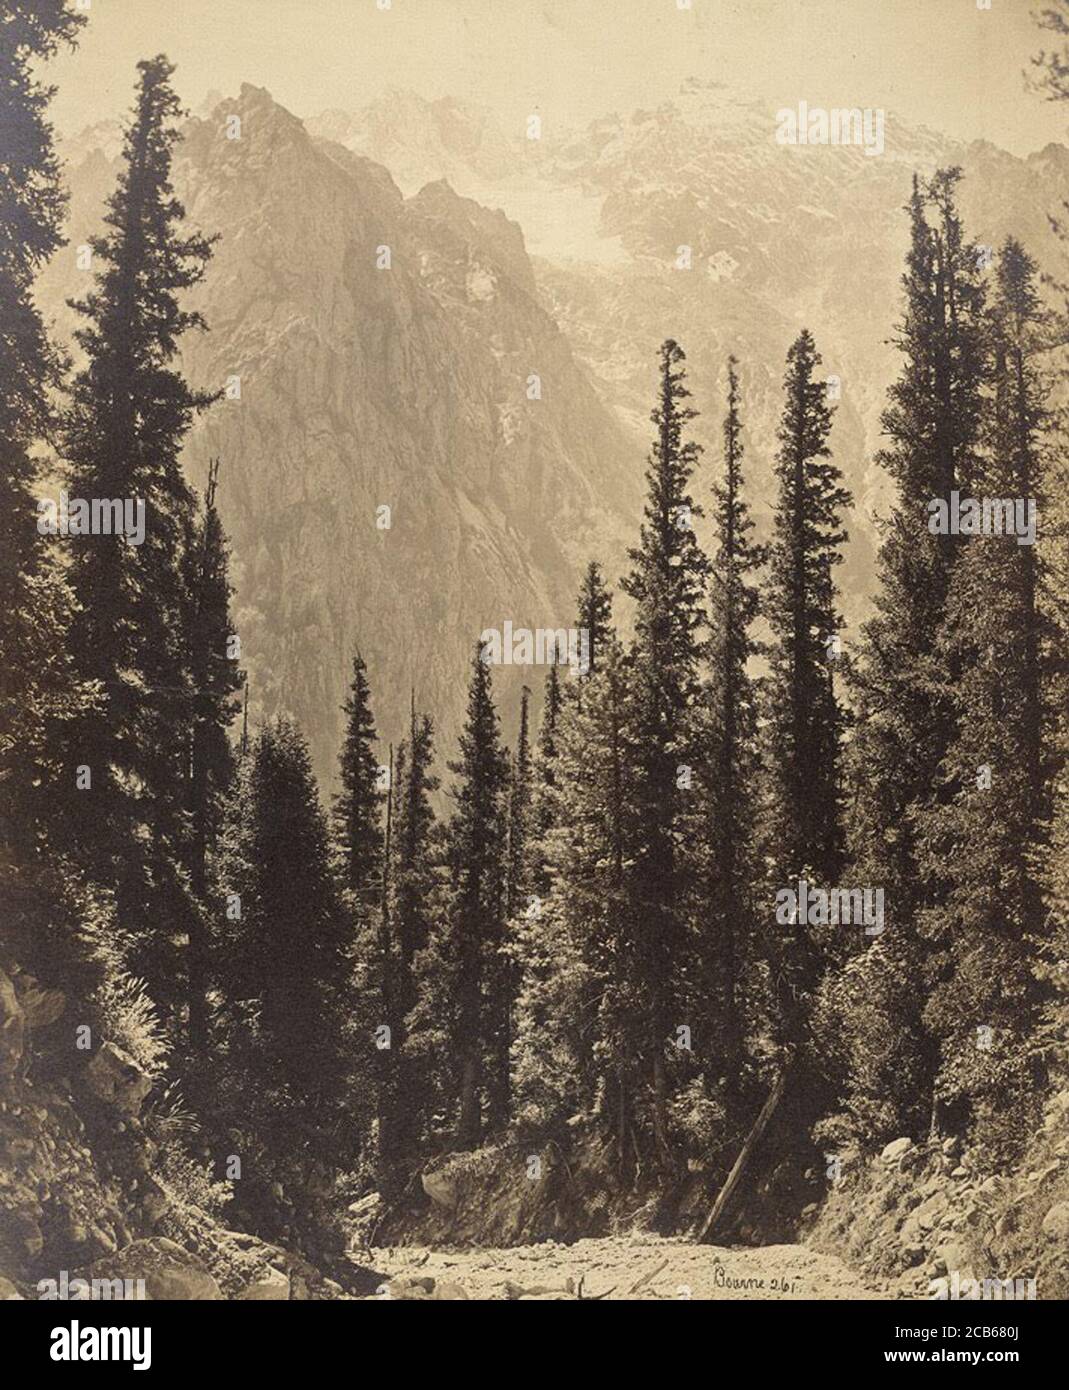 Wanga Valley, Himalaya 1863 by Samuel bourne Stock Photo